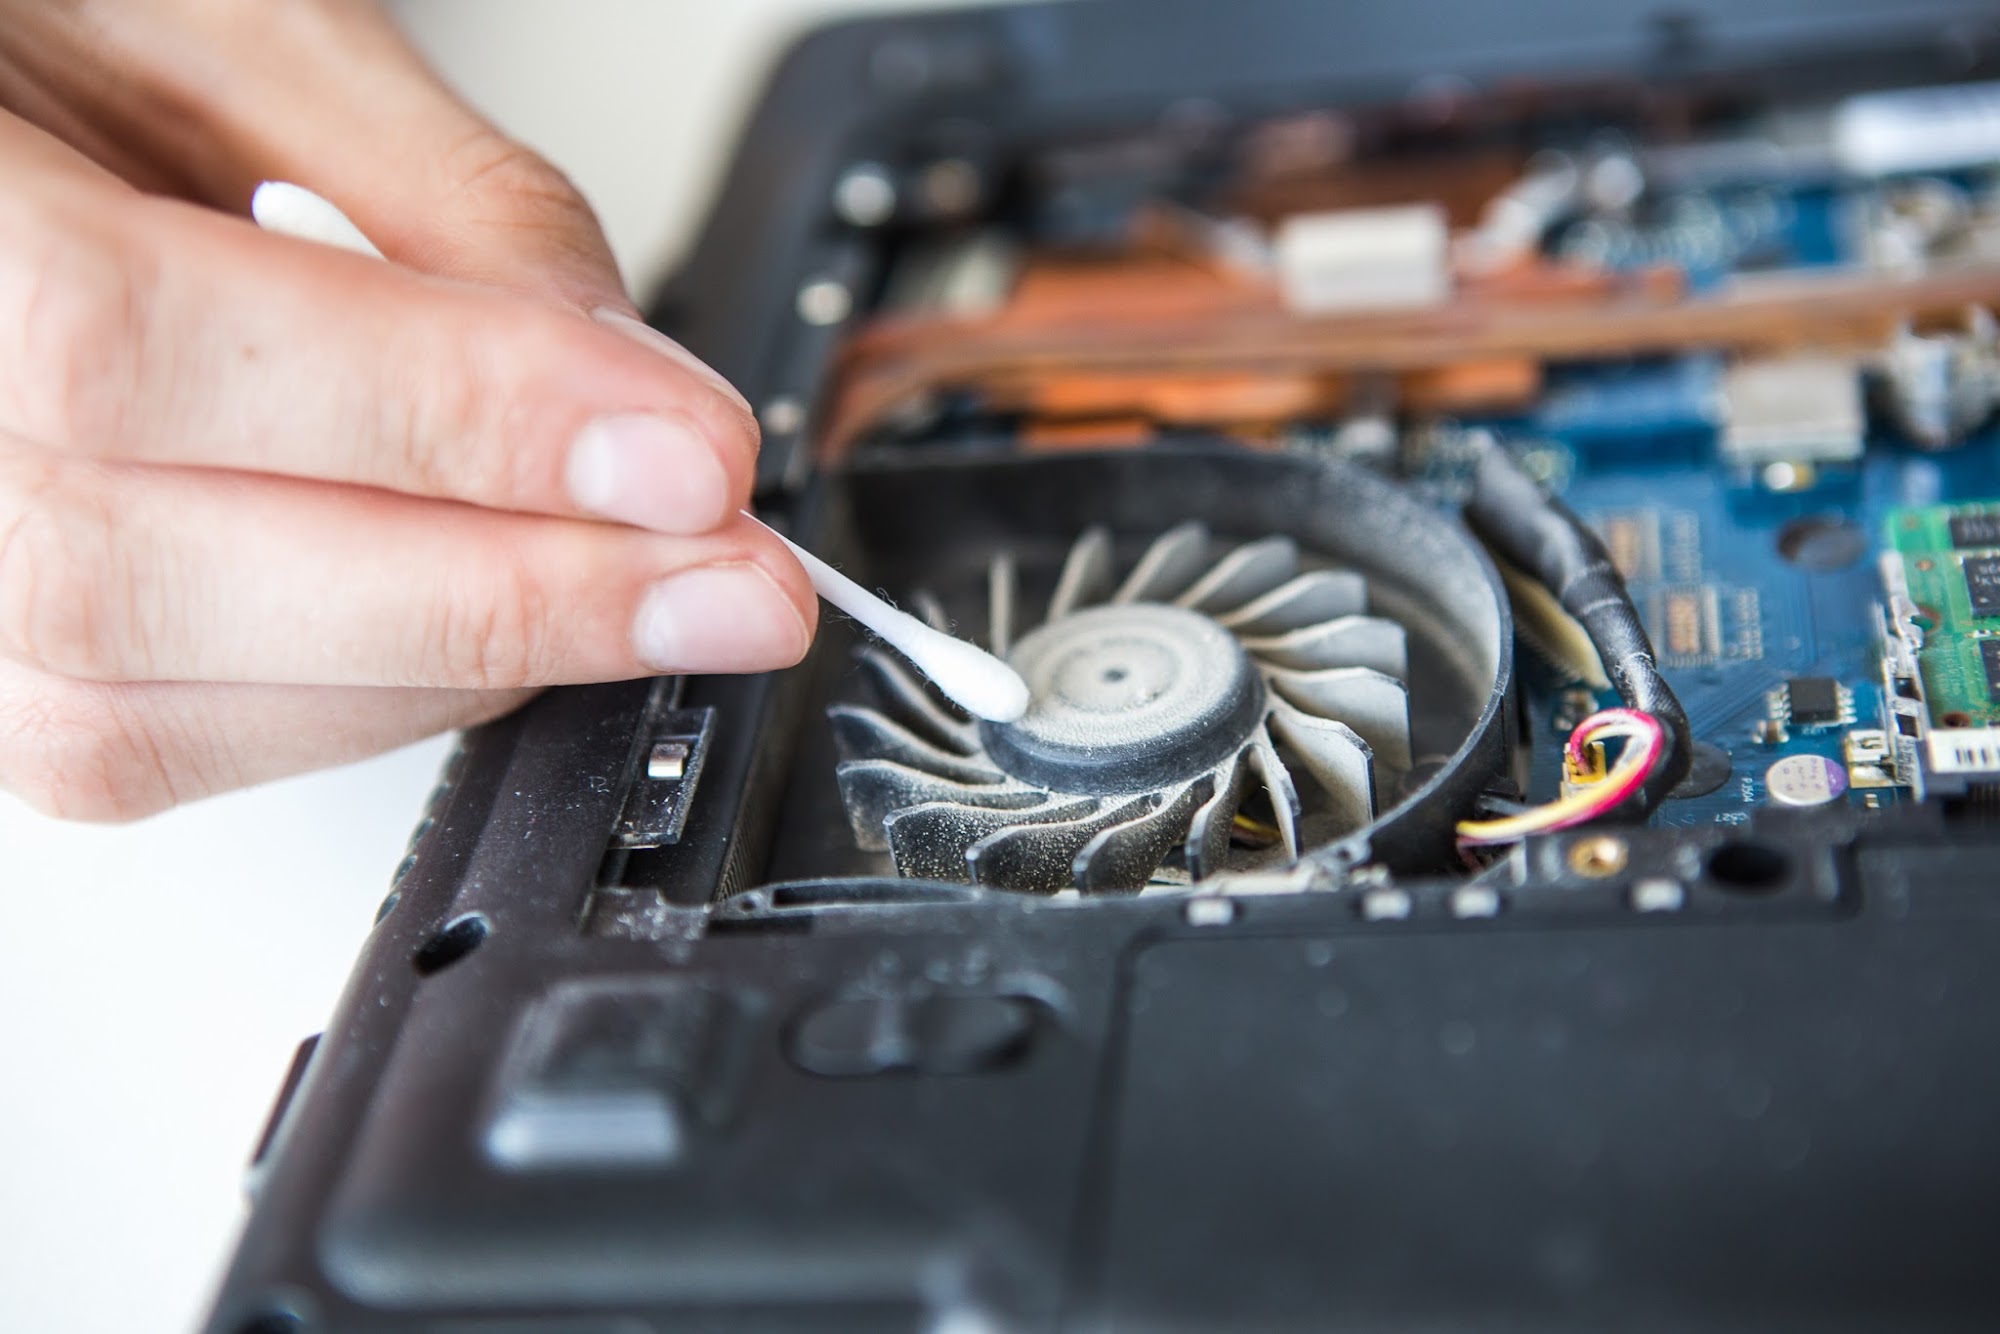 Wicked Fast PC Repair | Computer Repair Service in Augusta ME